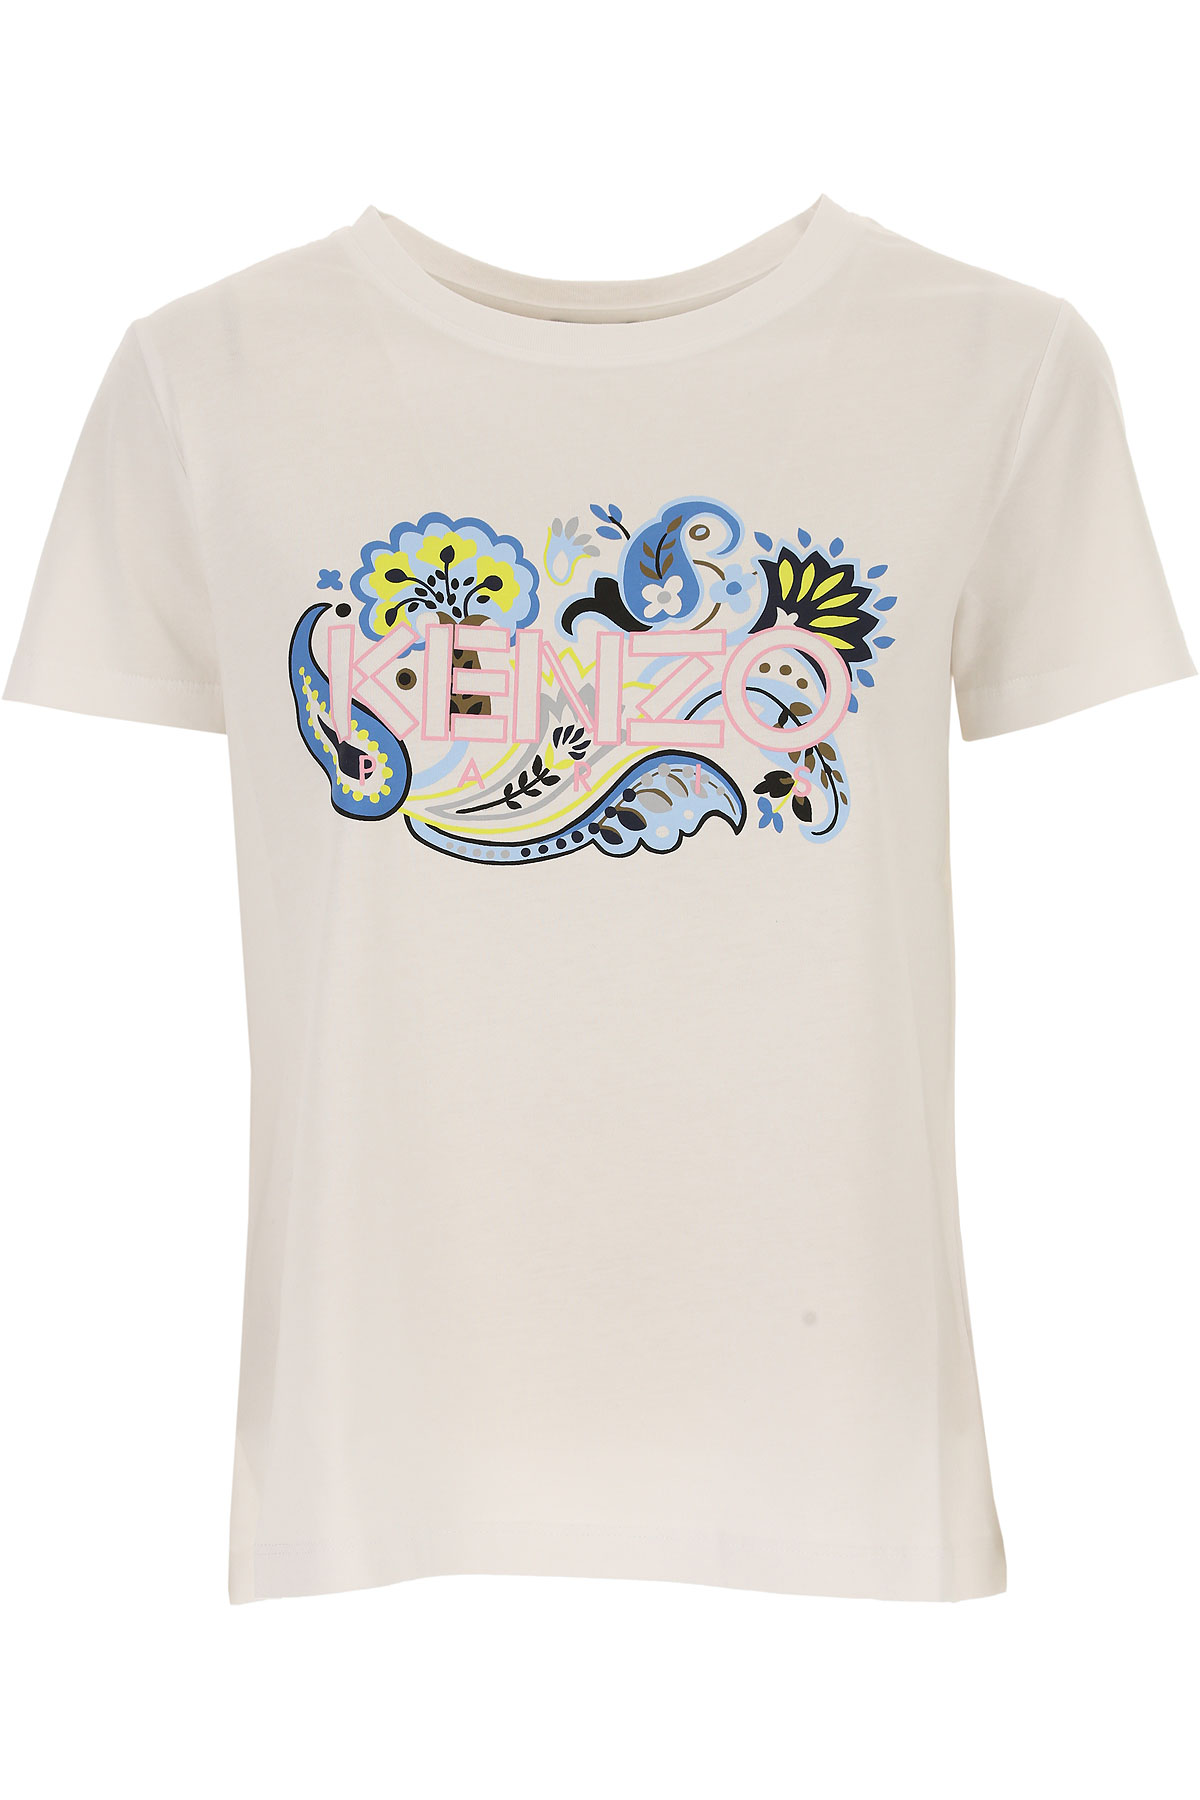 Kenzo T-shirt Femme, Blanc, Coton, 2017, 38 40 42